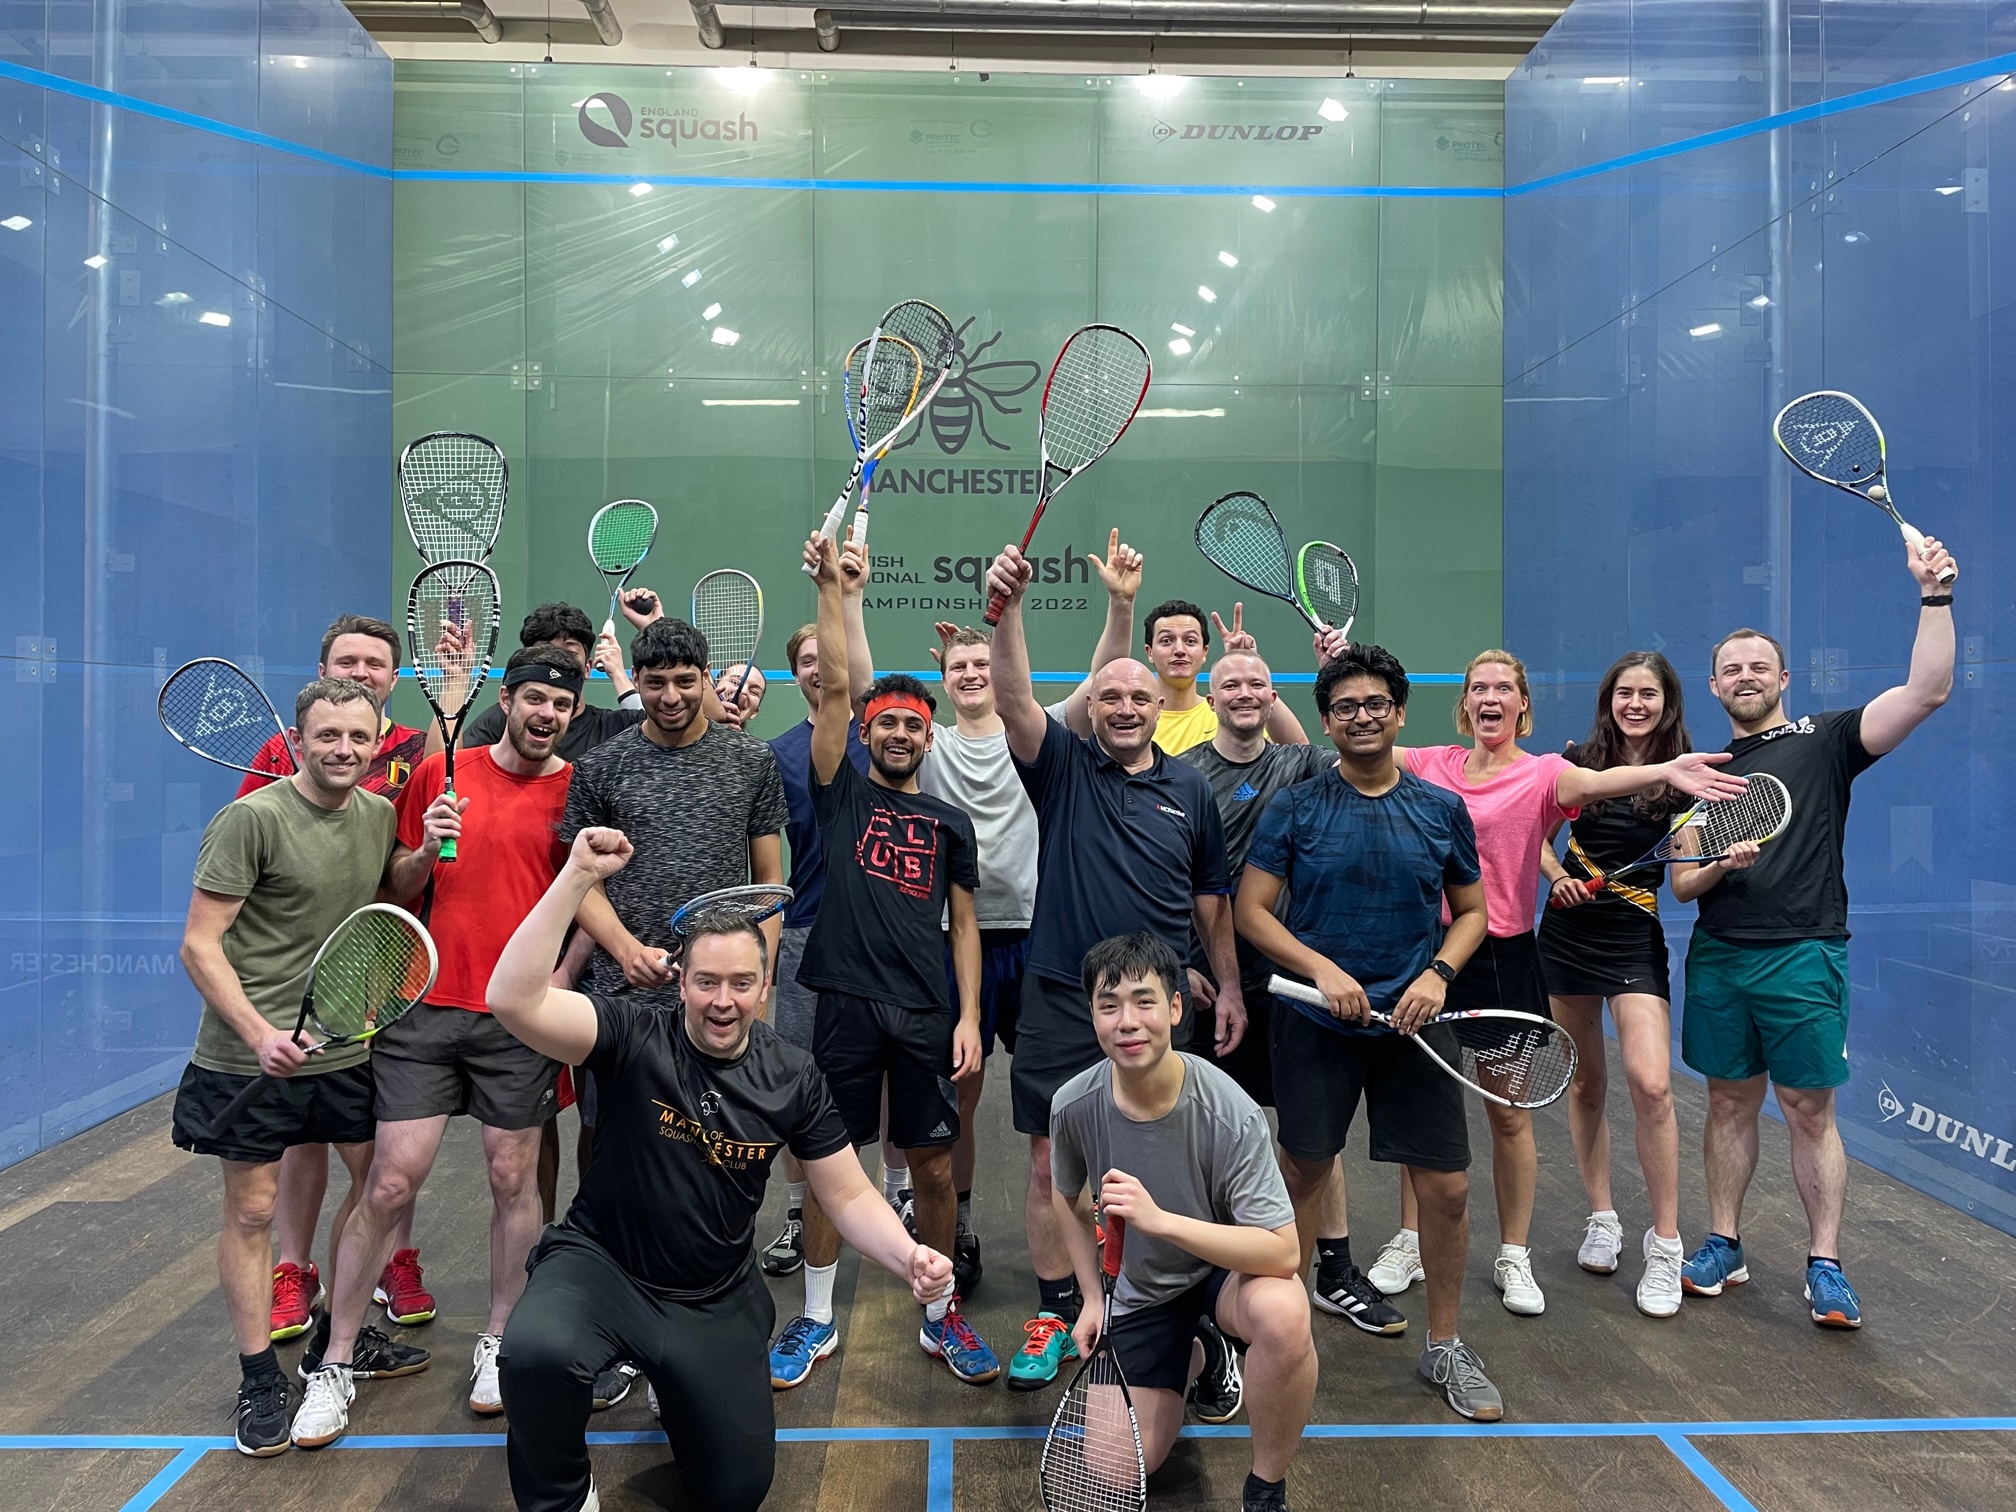 Squash at The National Squash Centre